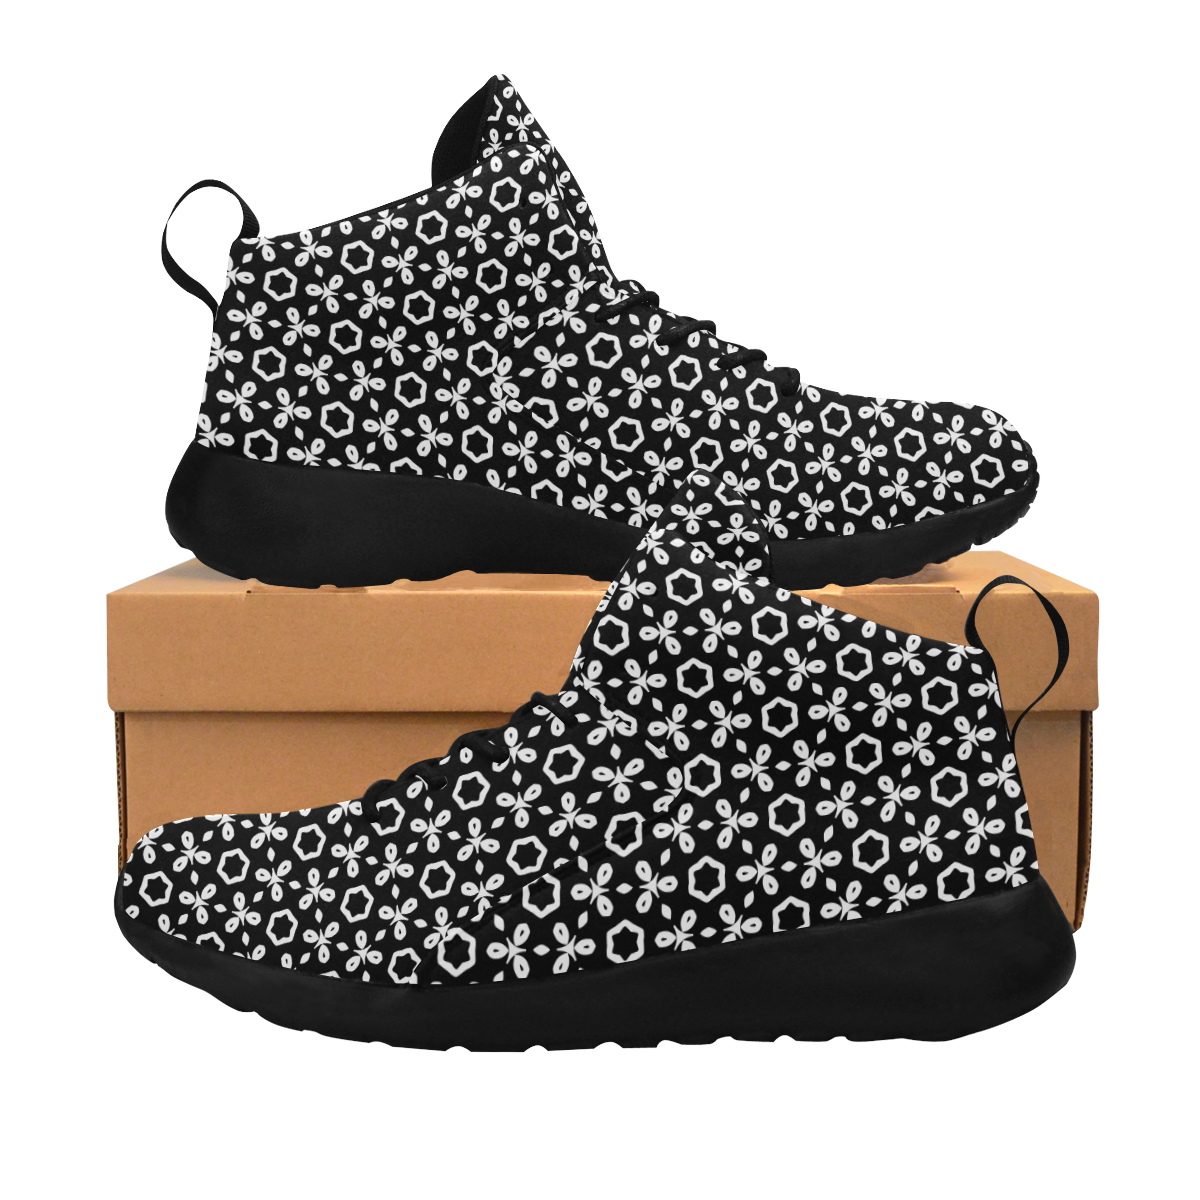 geometric pattern black and white Women's Chukka Training Shoes/Large Size (Model 57502)